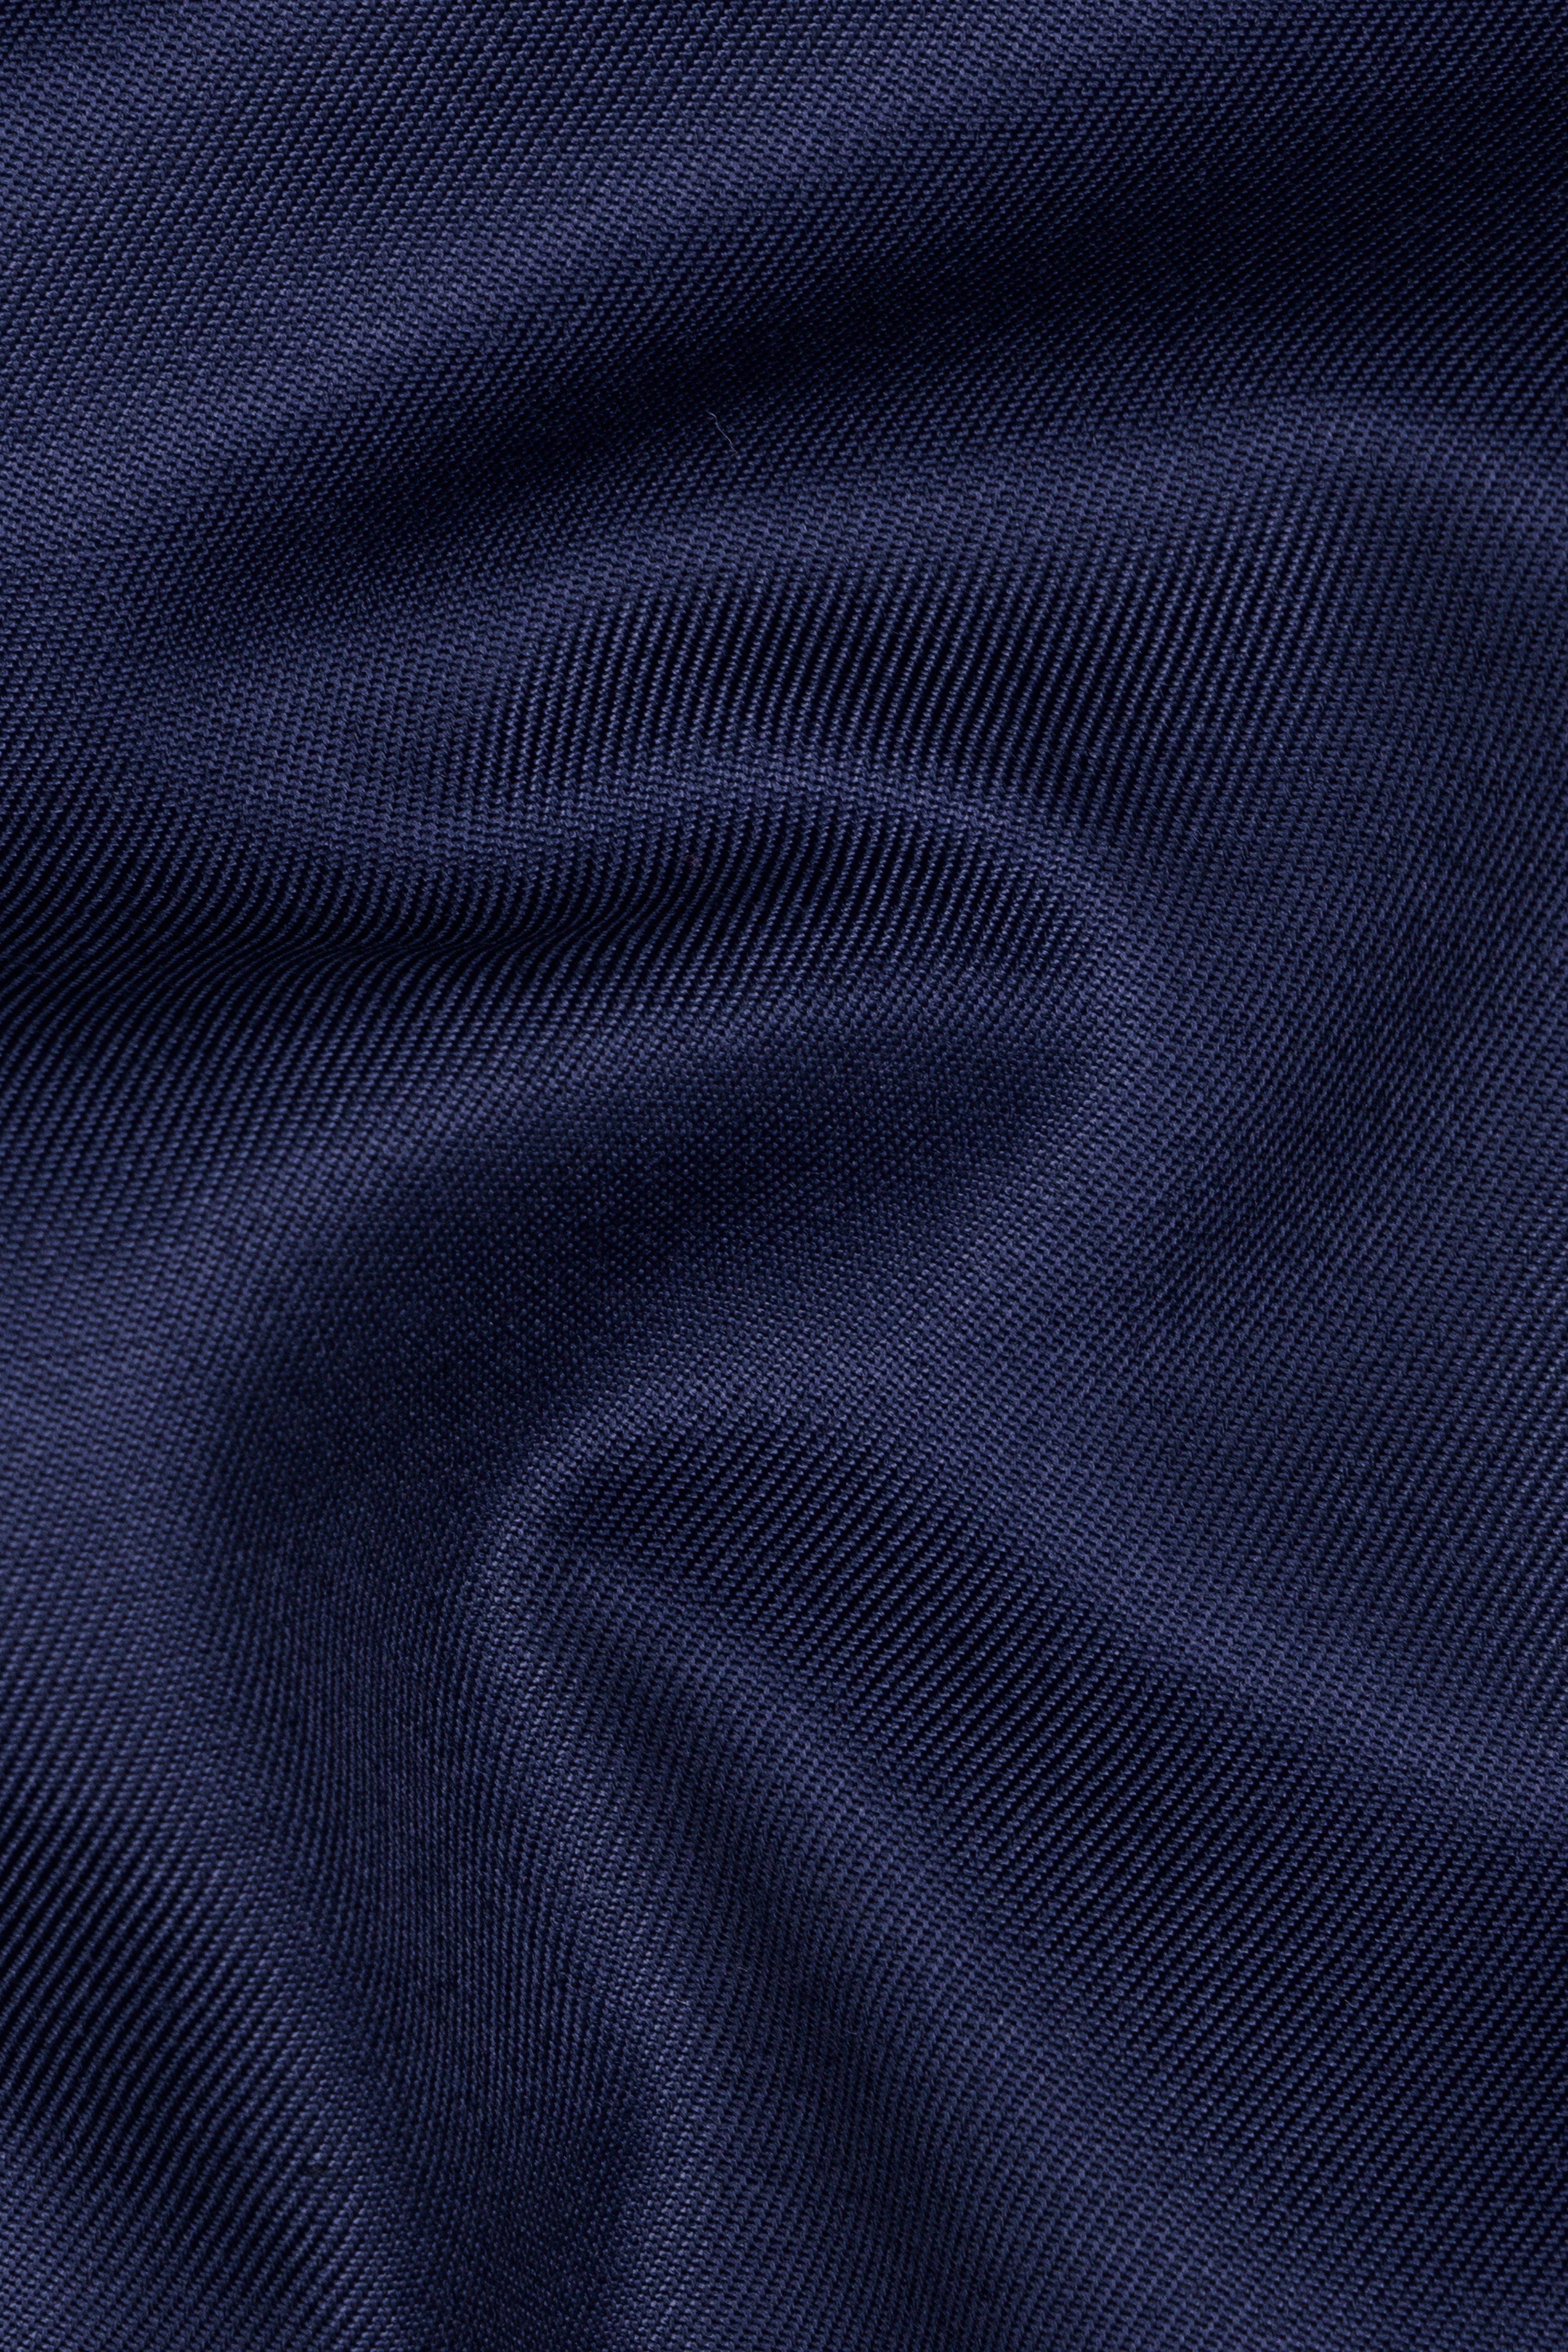 Tealish Blue Plain Solid Wool Blend Pant